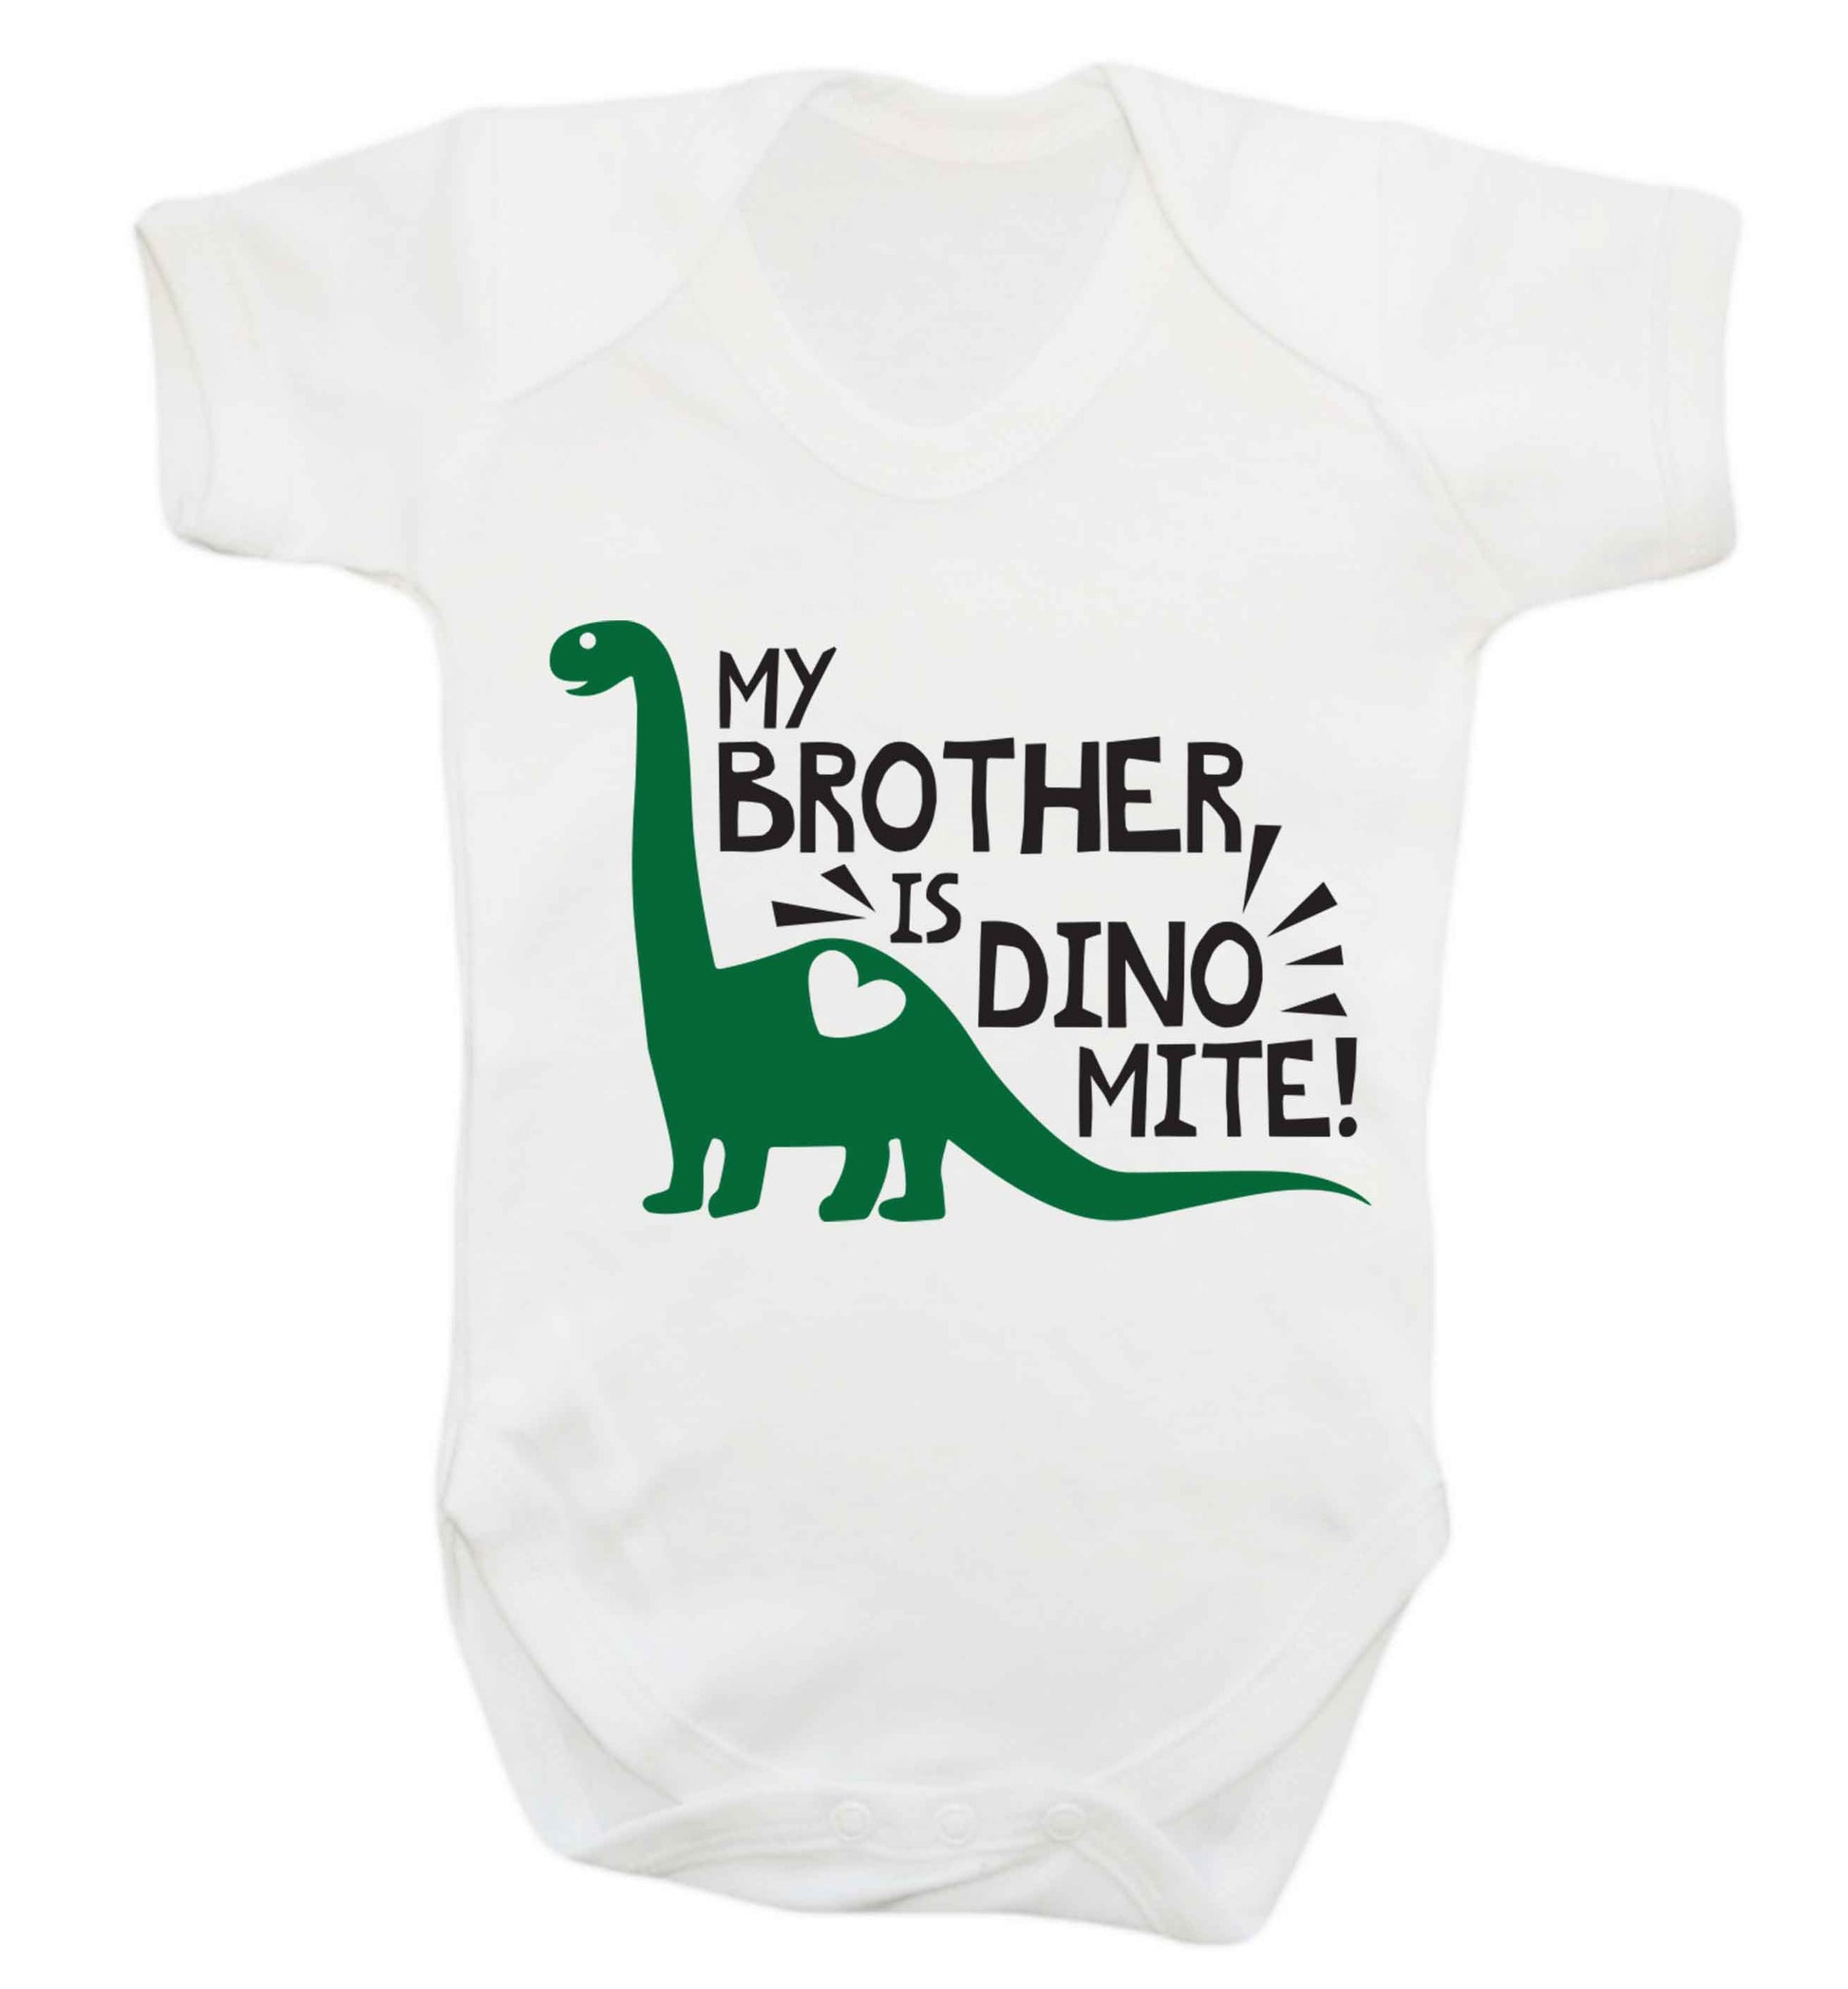 My brother is dinomite! Baby Vest white 18-24 months